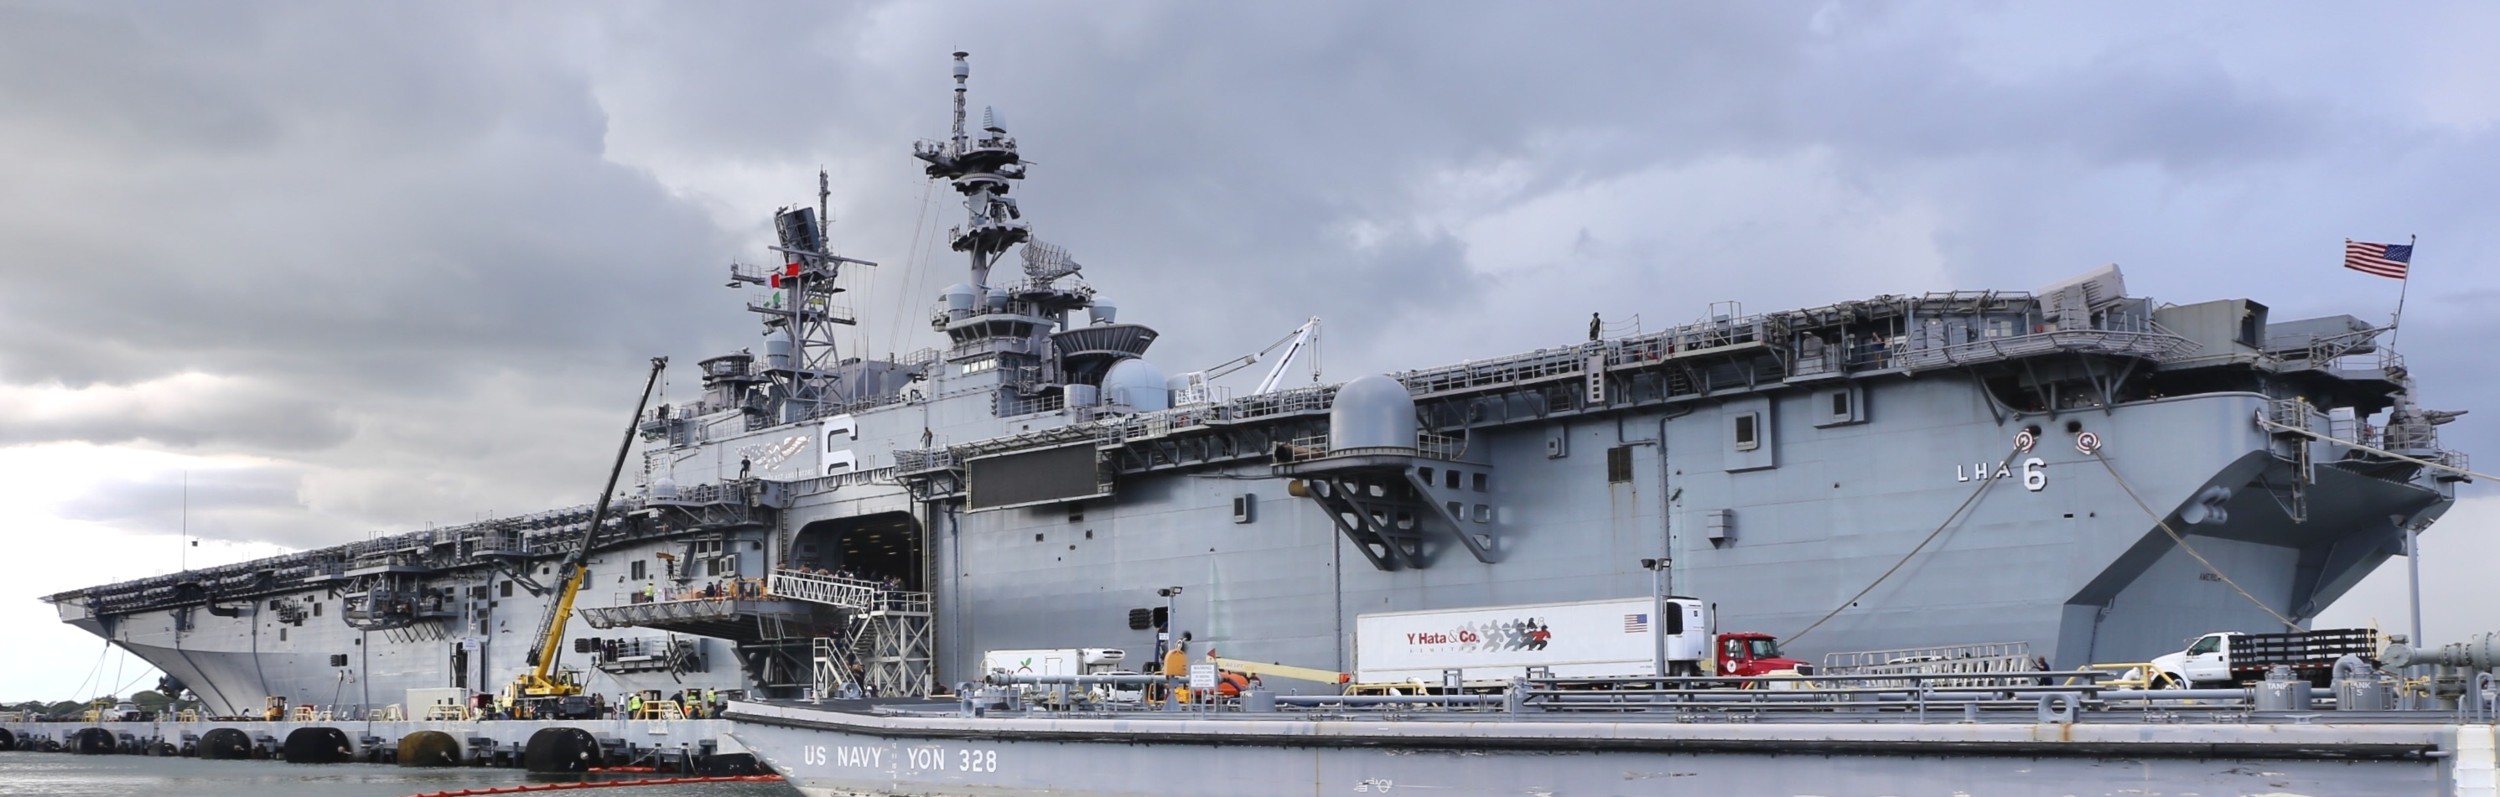 lha-6 uss america amphibious assault ship landing us navy marines pearl harbor hickam hawaii 150